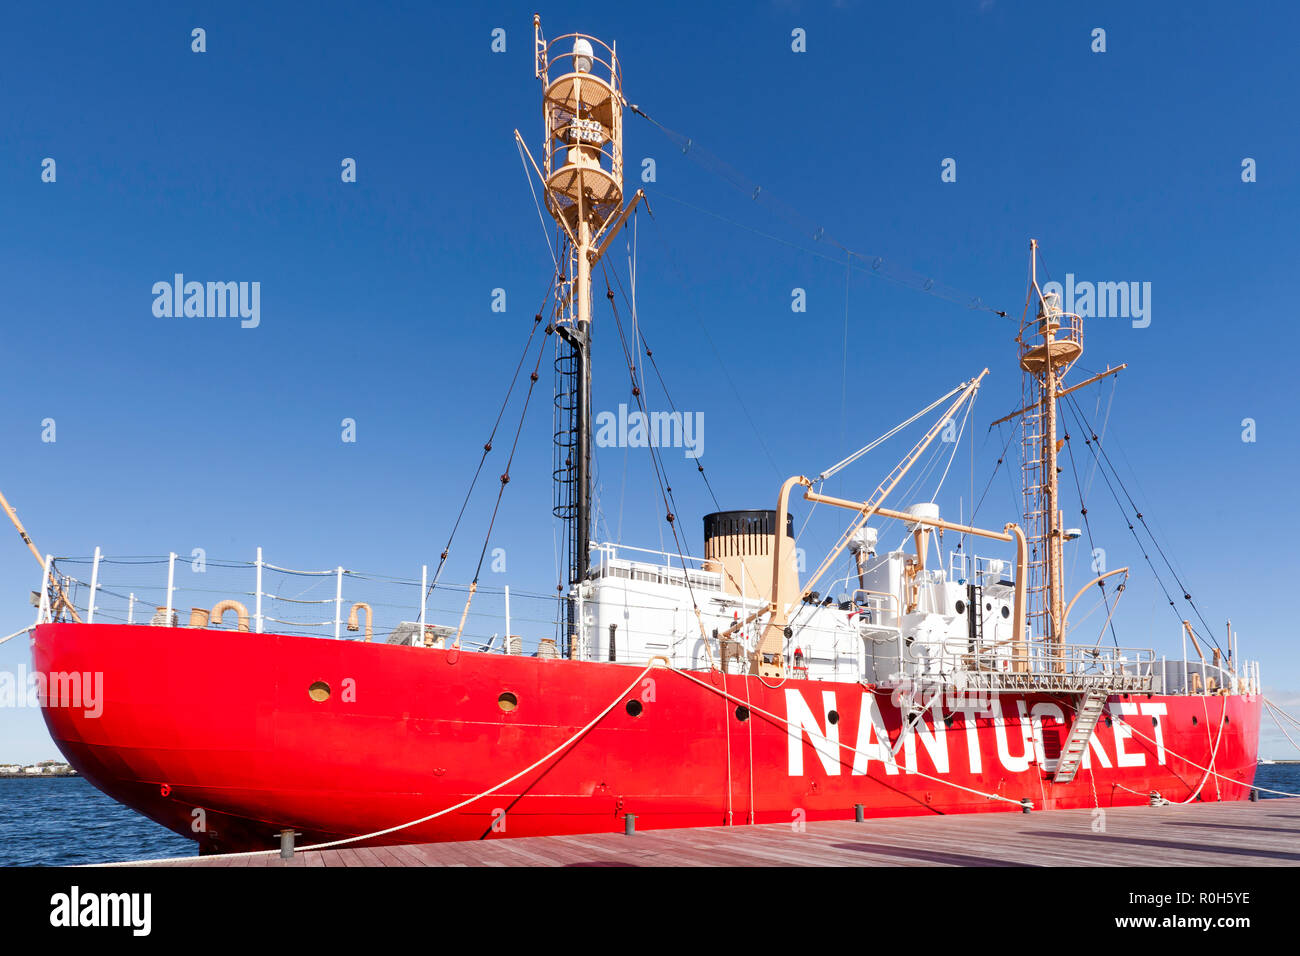 Lightship WLV-612 (Nantucket Lightship) moored in Boston Harbour Stock Photo